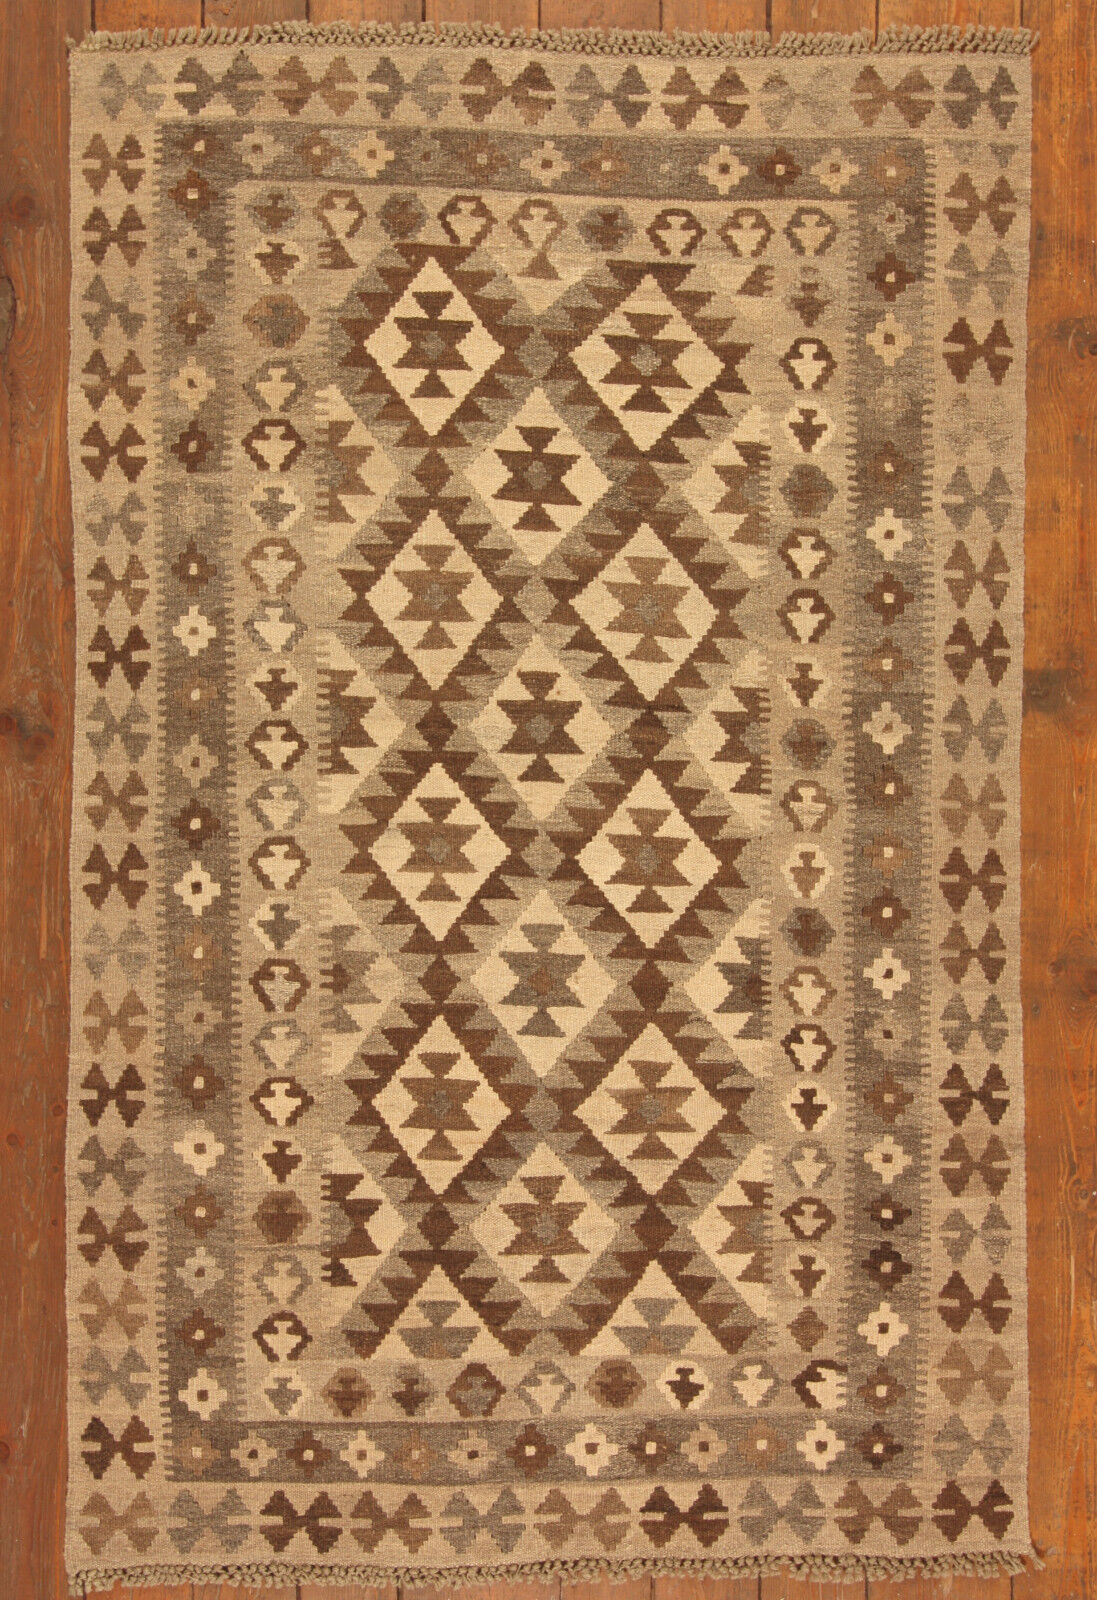 Close-up of the captivating geometric design on the Handmade Vintage Afghan Flatweave Kilim